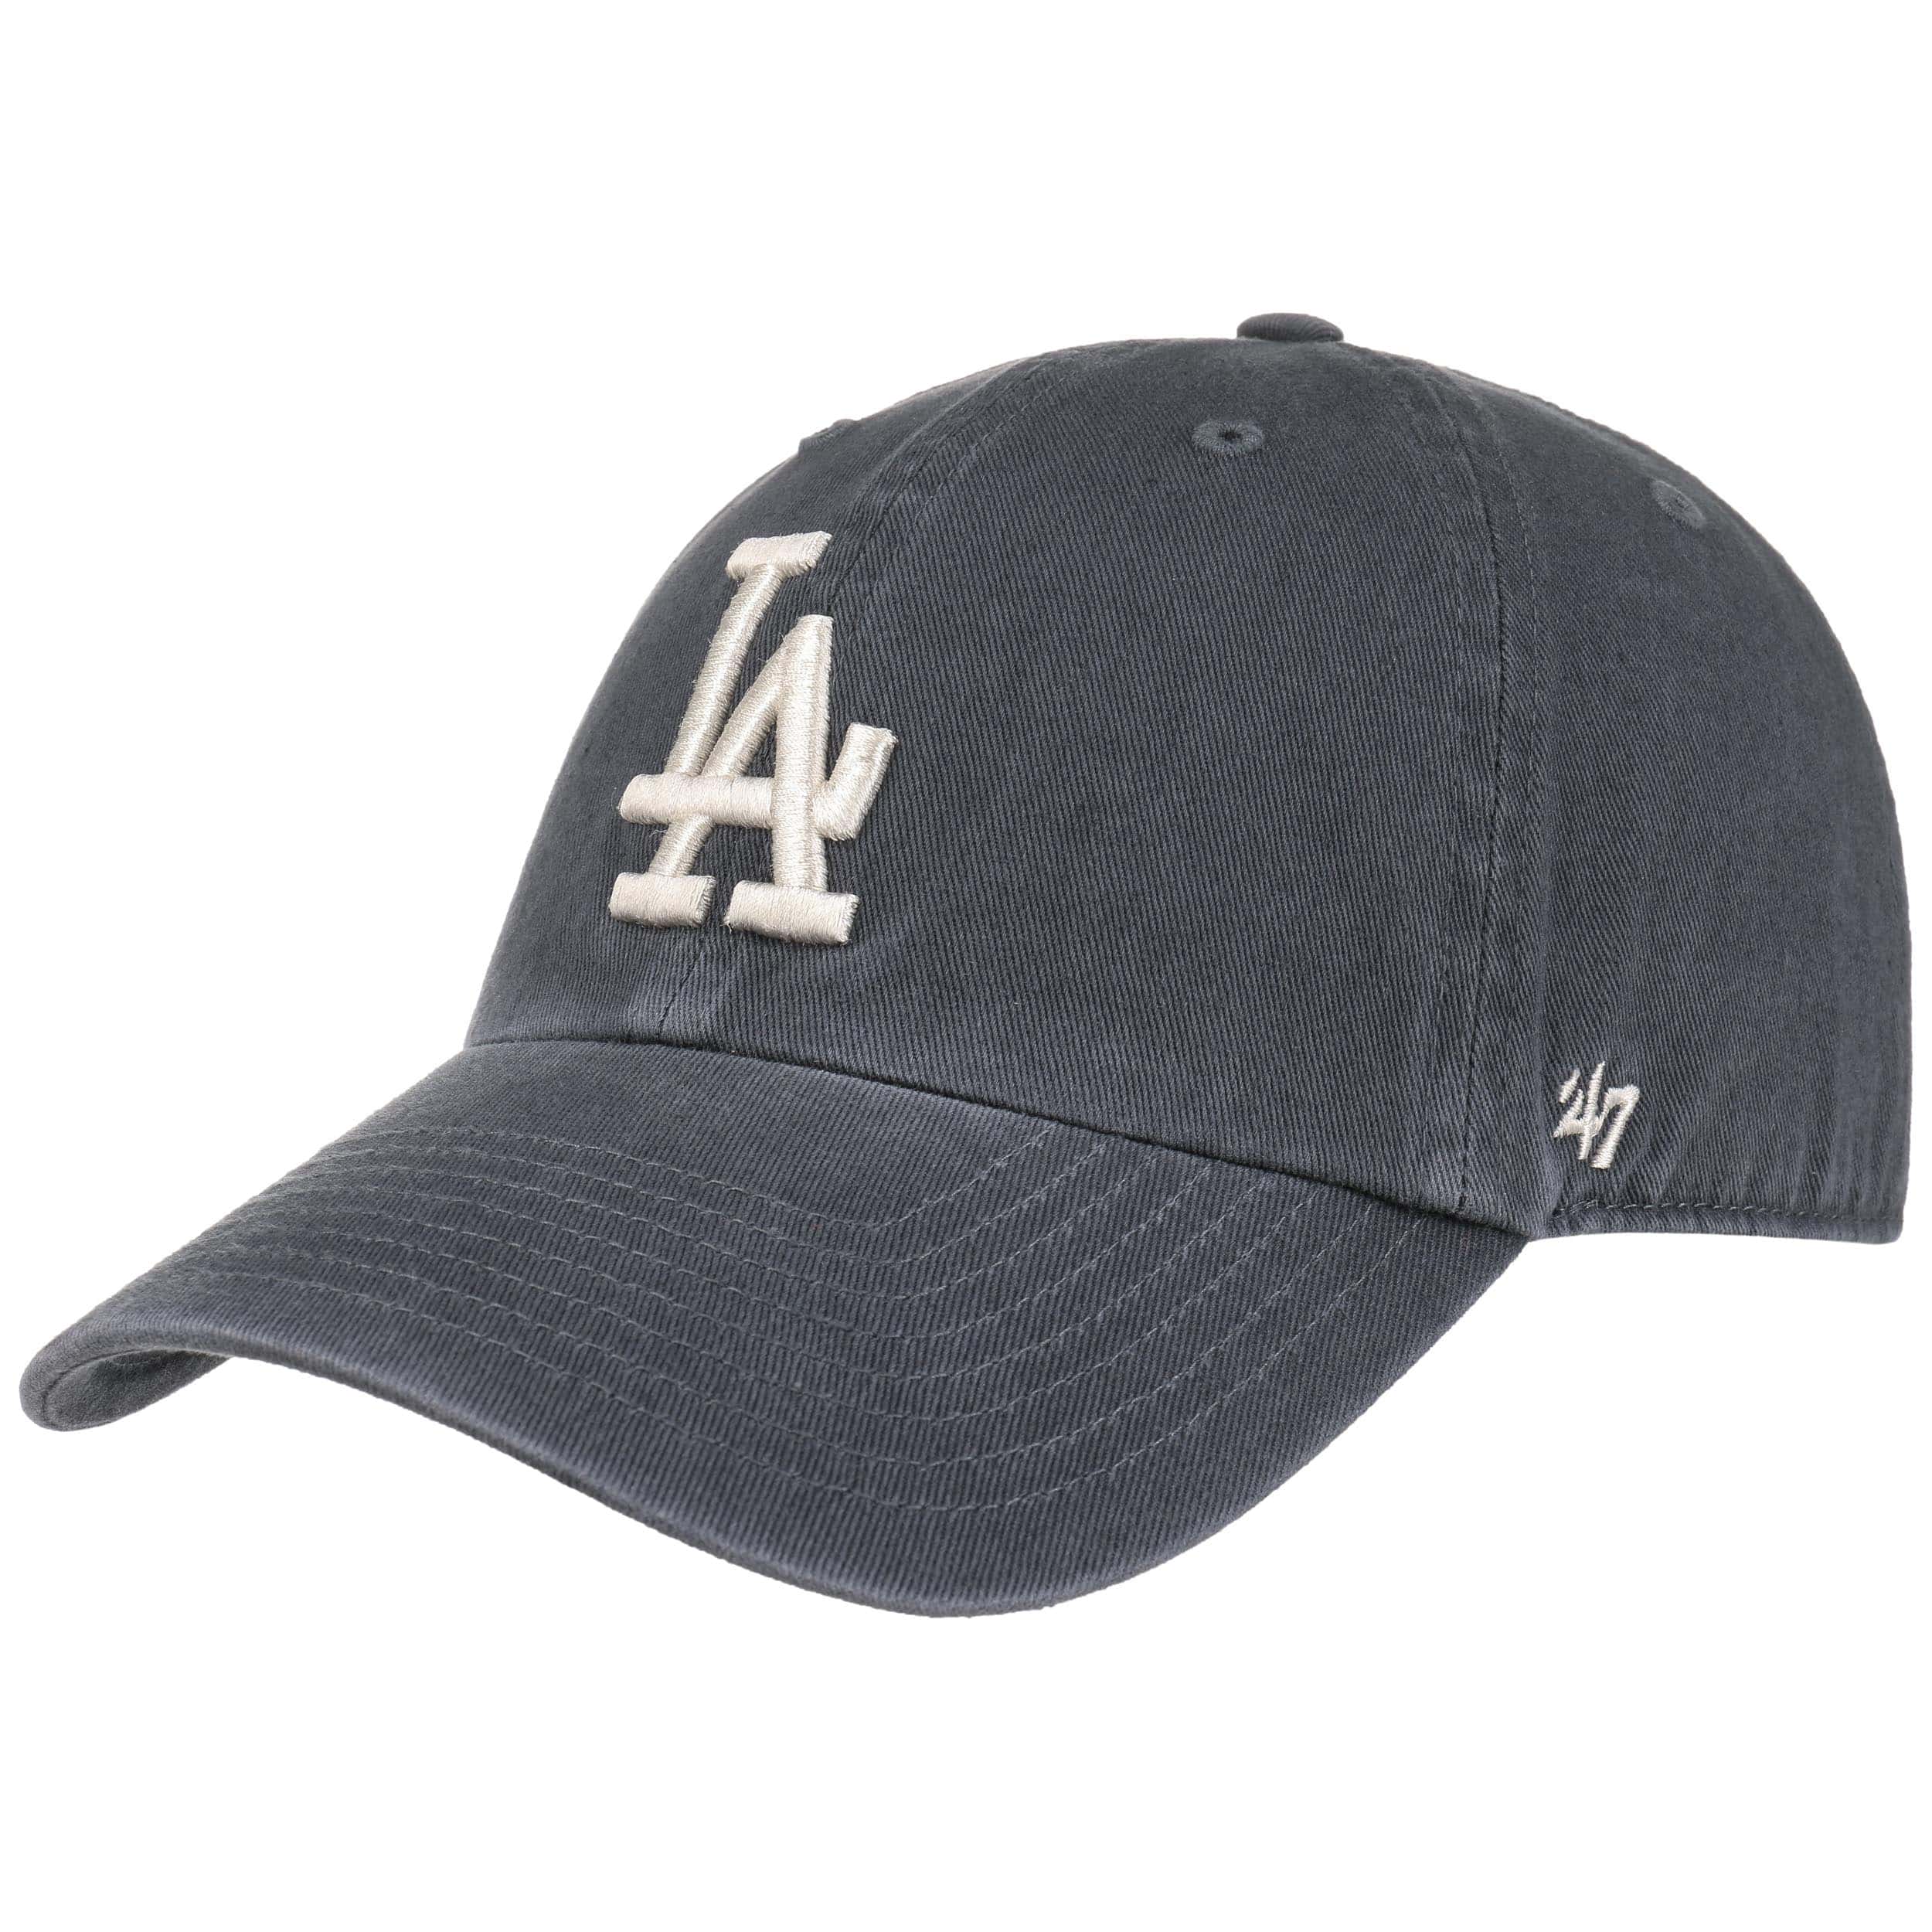 Clean Up Vintage Dodgers Cap by 47 Brand